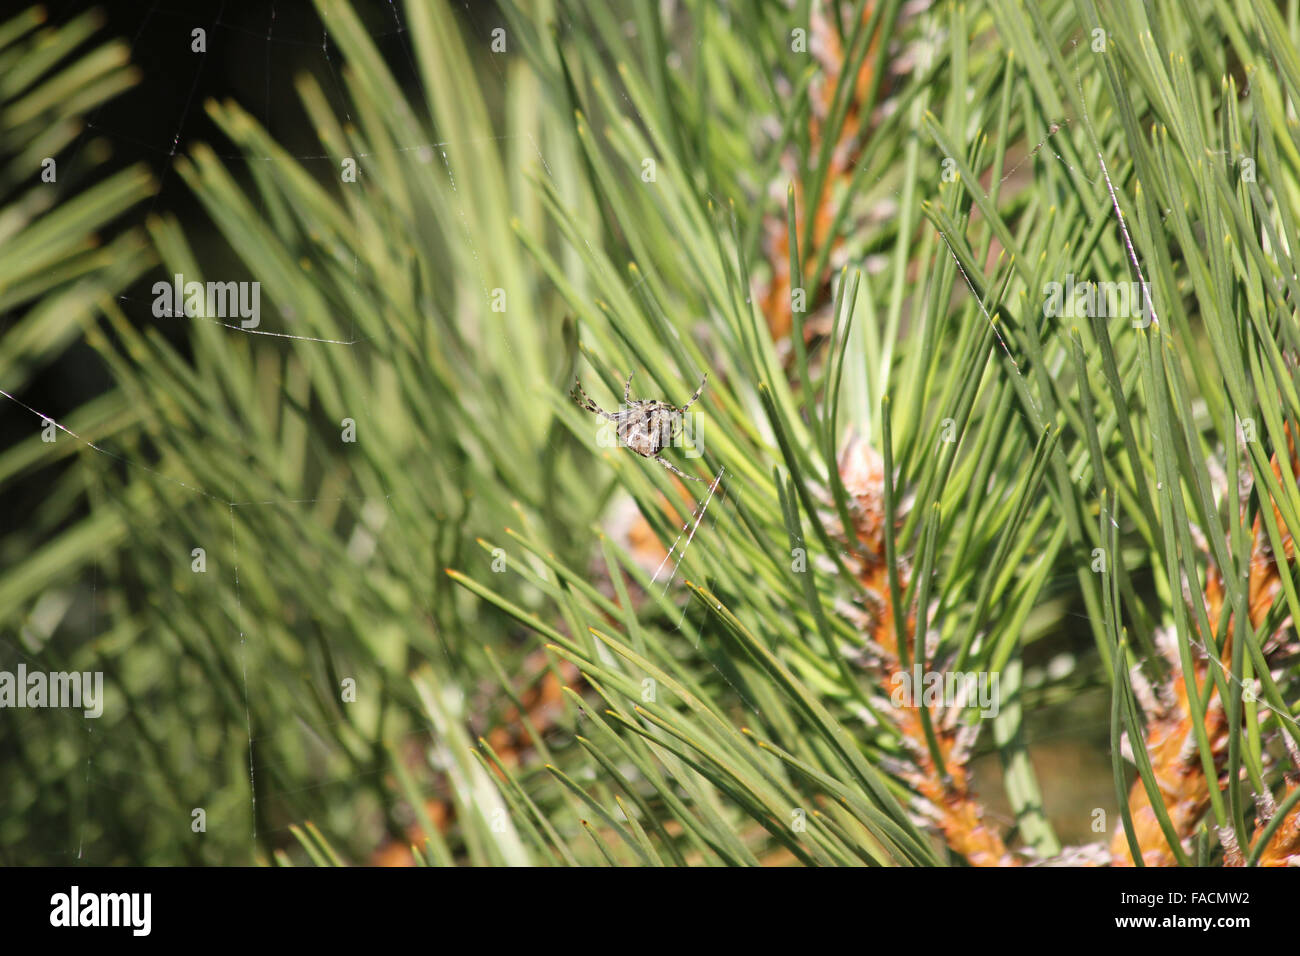 European garden spider (Araneus diadematus) spinning web in Austrian pine (Pinus nigra) Stock Photo